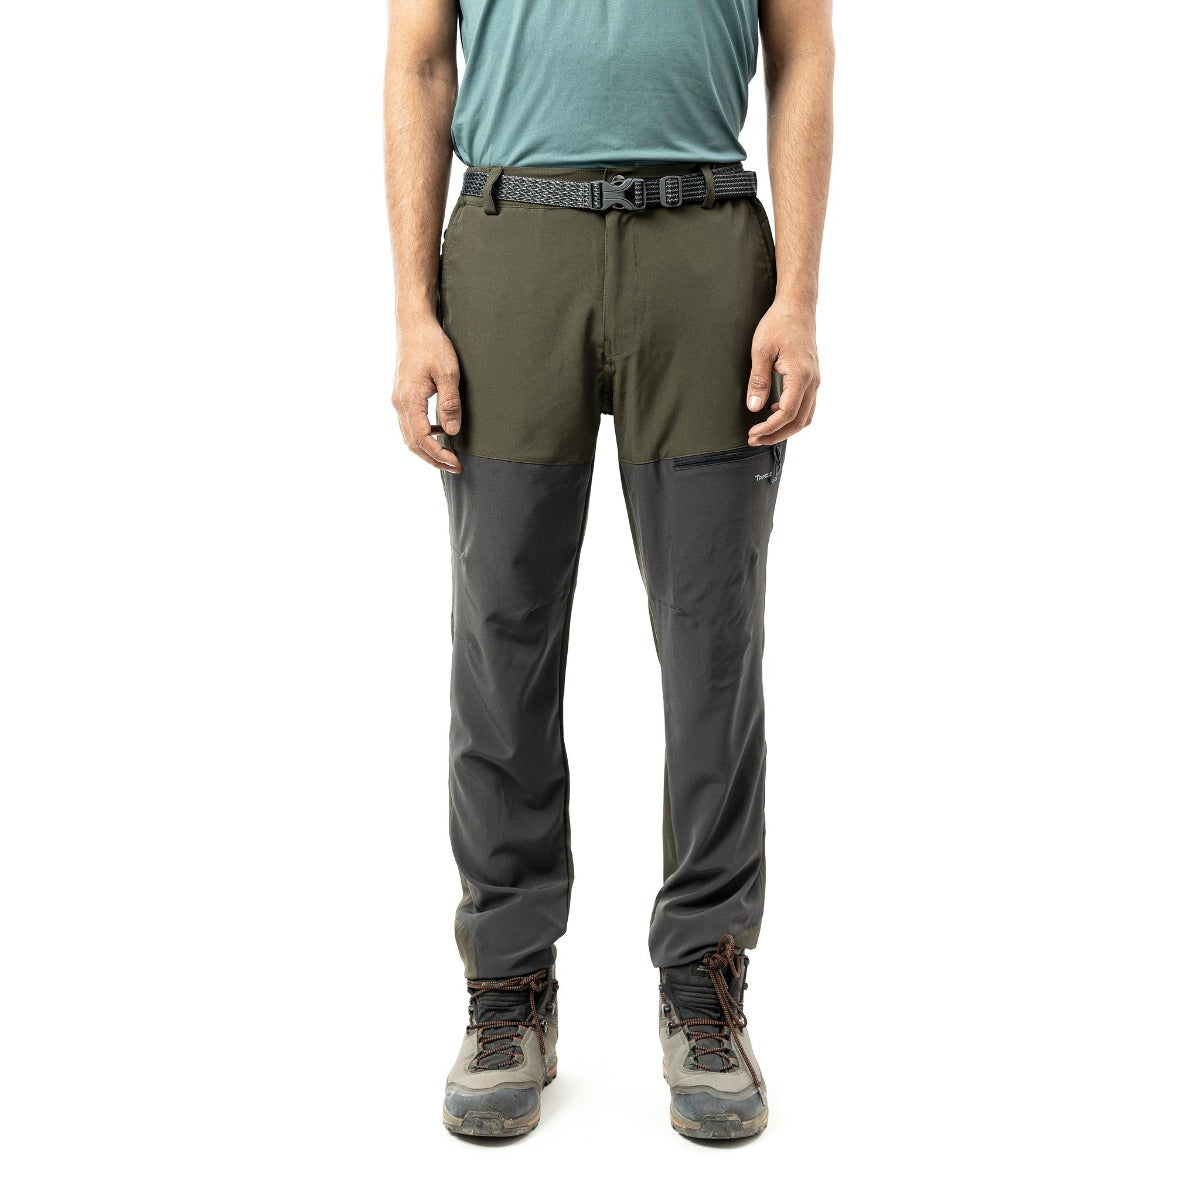 Men's Trekking and Hiking Pants - Green & Grey 1